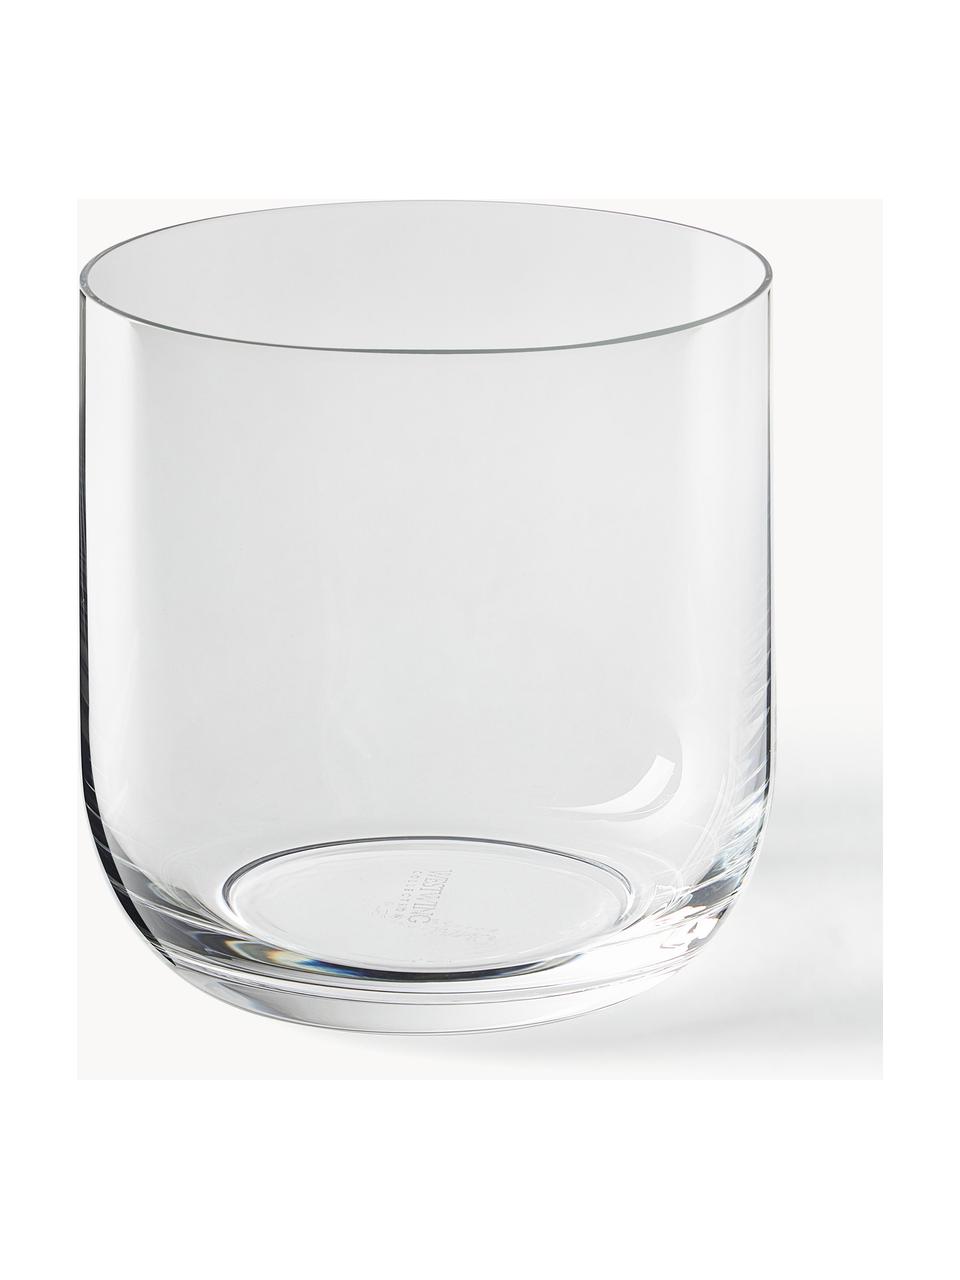 Sklenice Eleia, 4 ks, Křišťálové sklo, Transparentní, Ø 7 cm, V 9 cm, 330 ml